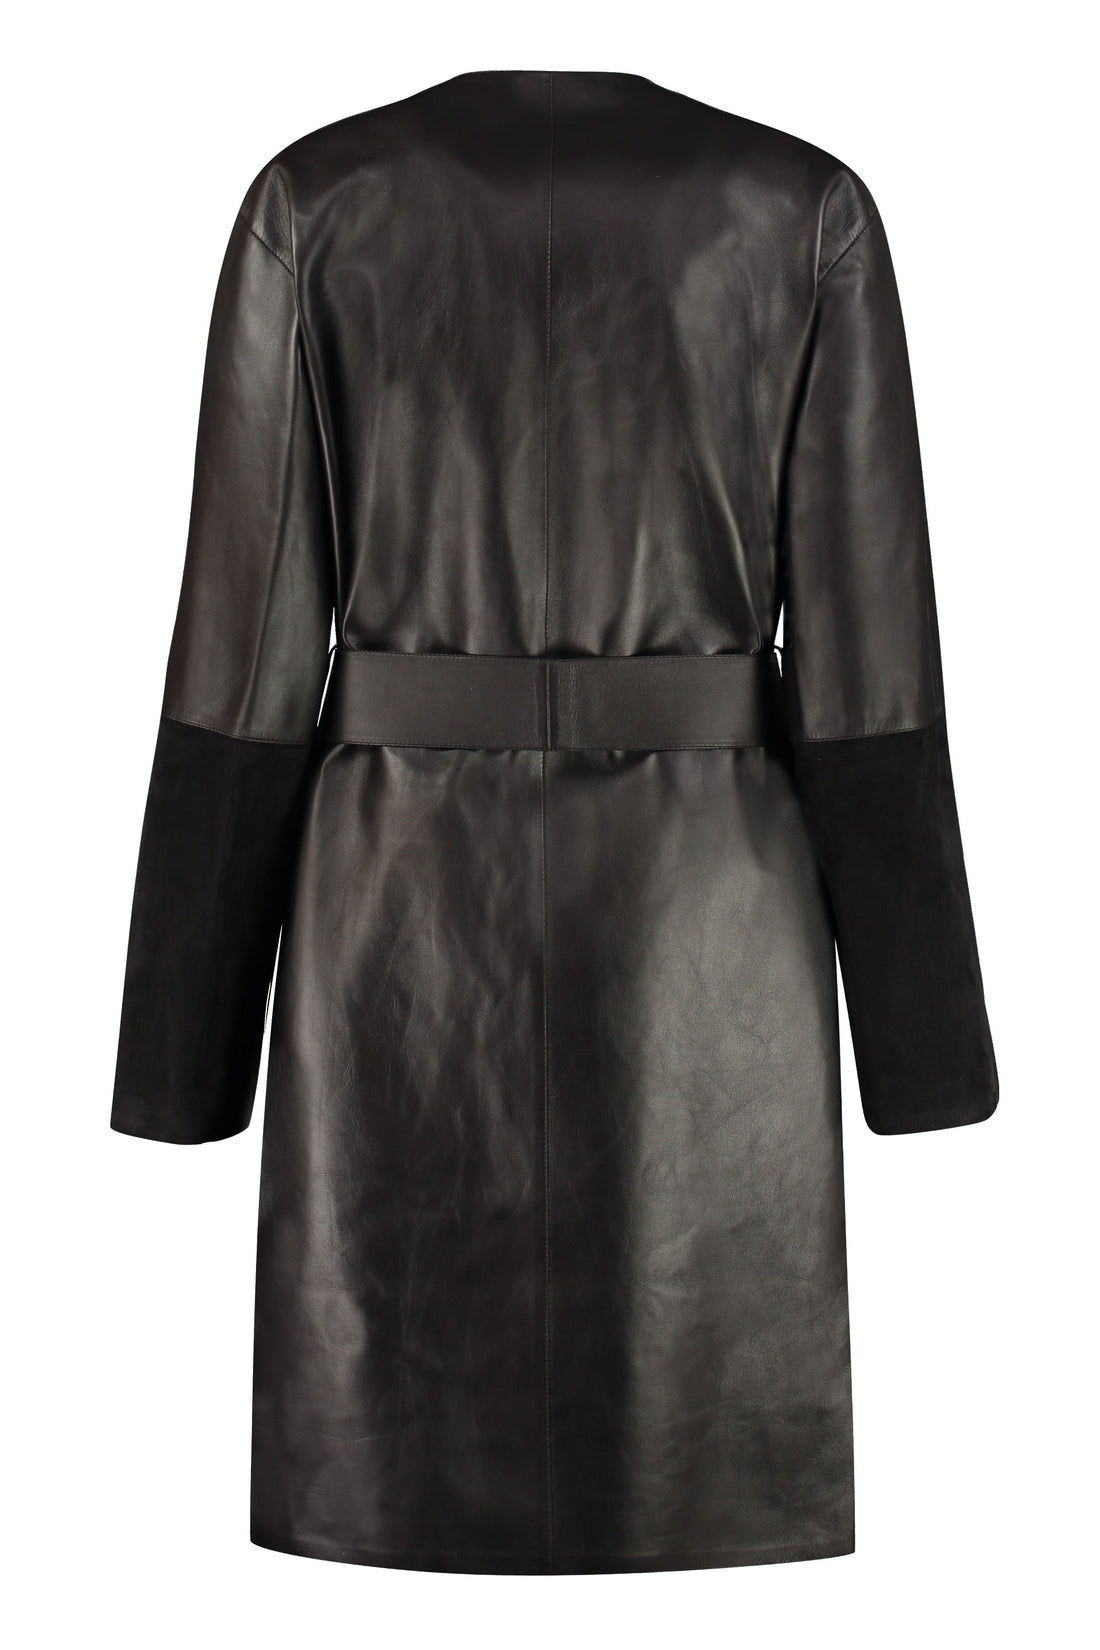 Loewe-OUTLET-SALE-Belted leather jacket-ARCHIVIST